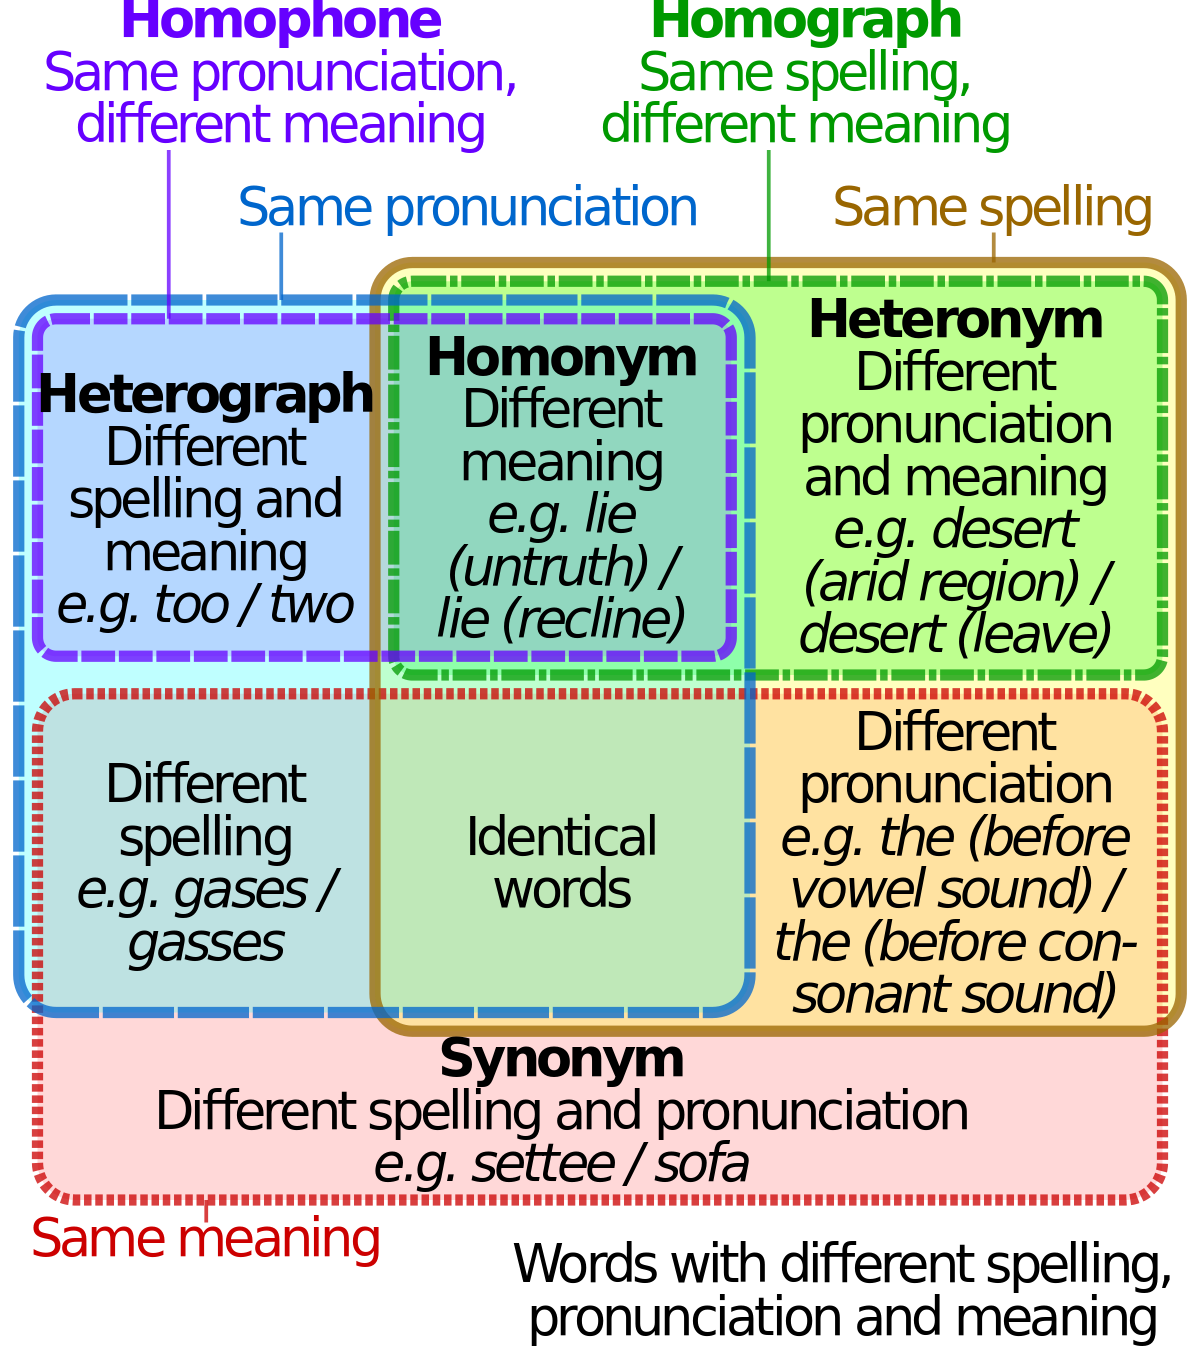 Heteronym Linguistics Wikipedia